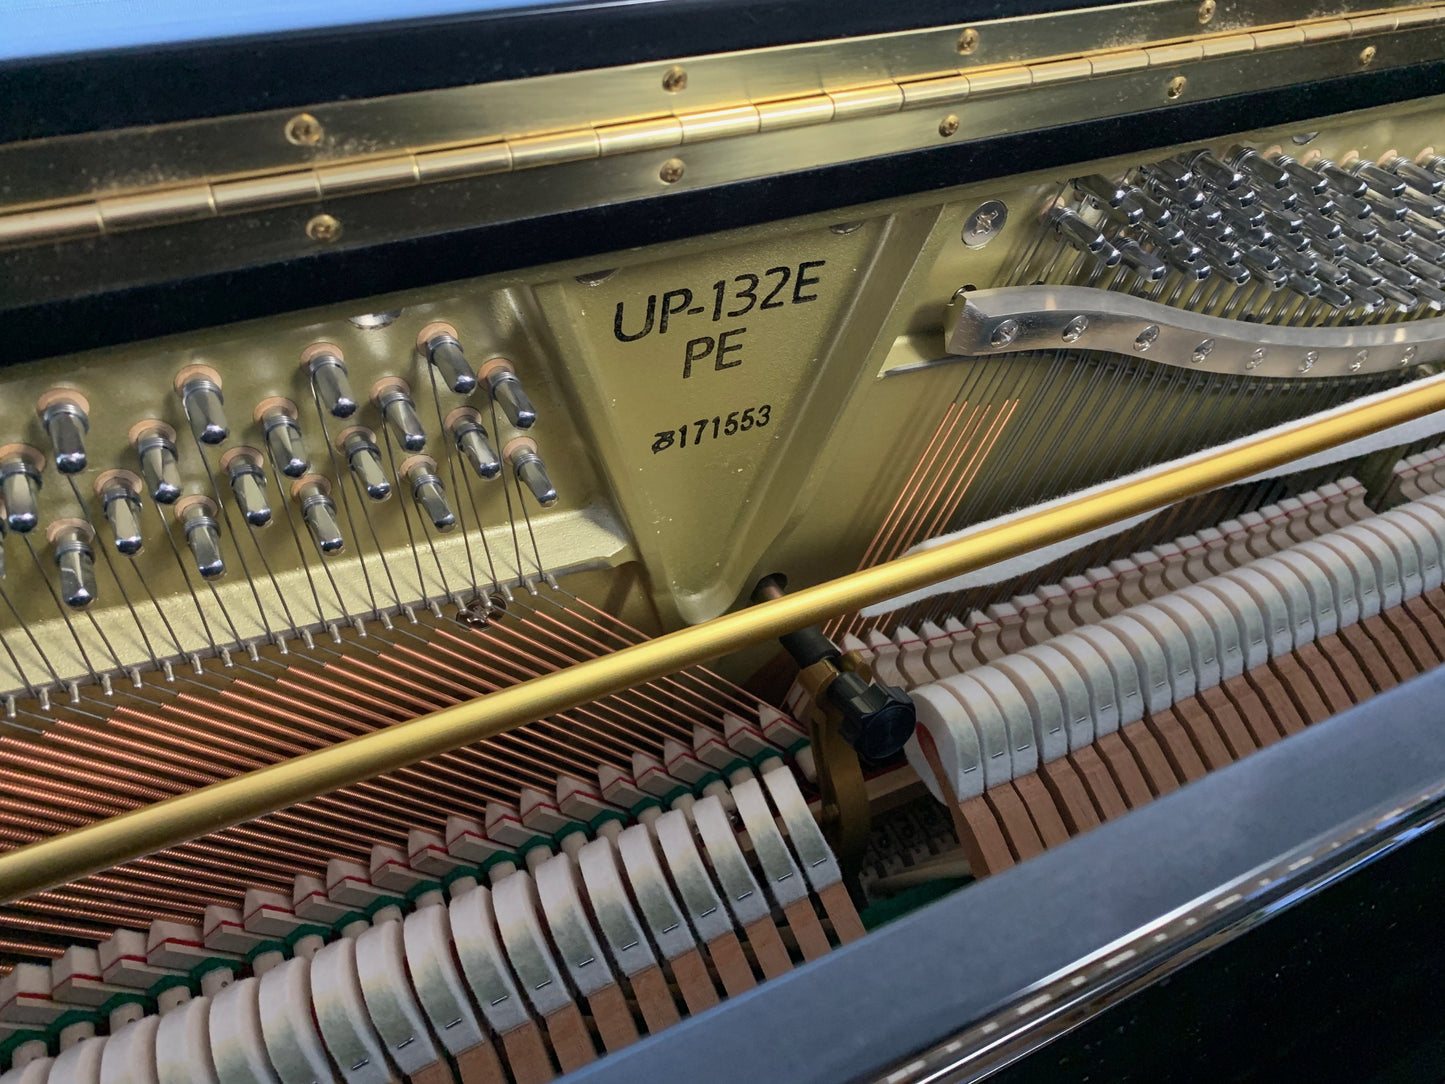 2012 Boston Upright Piano UP-132E Performance Edition